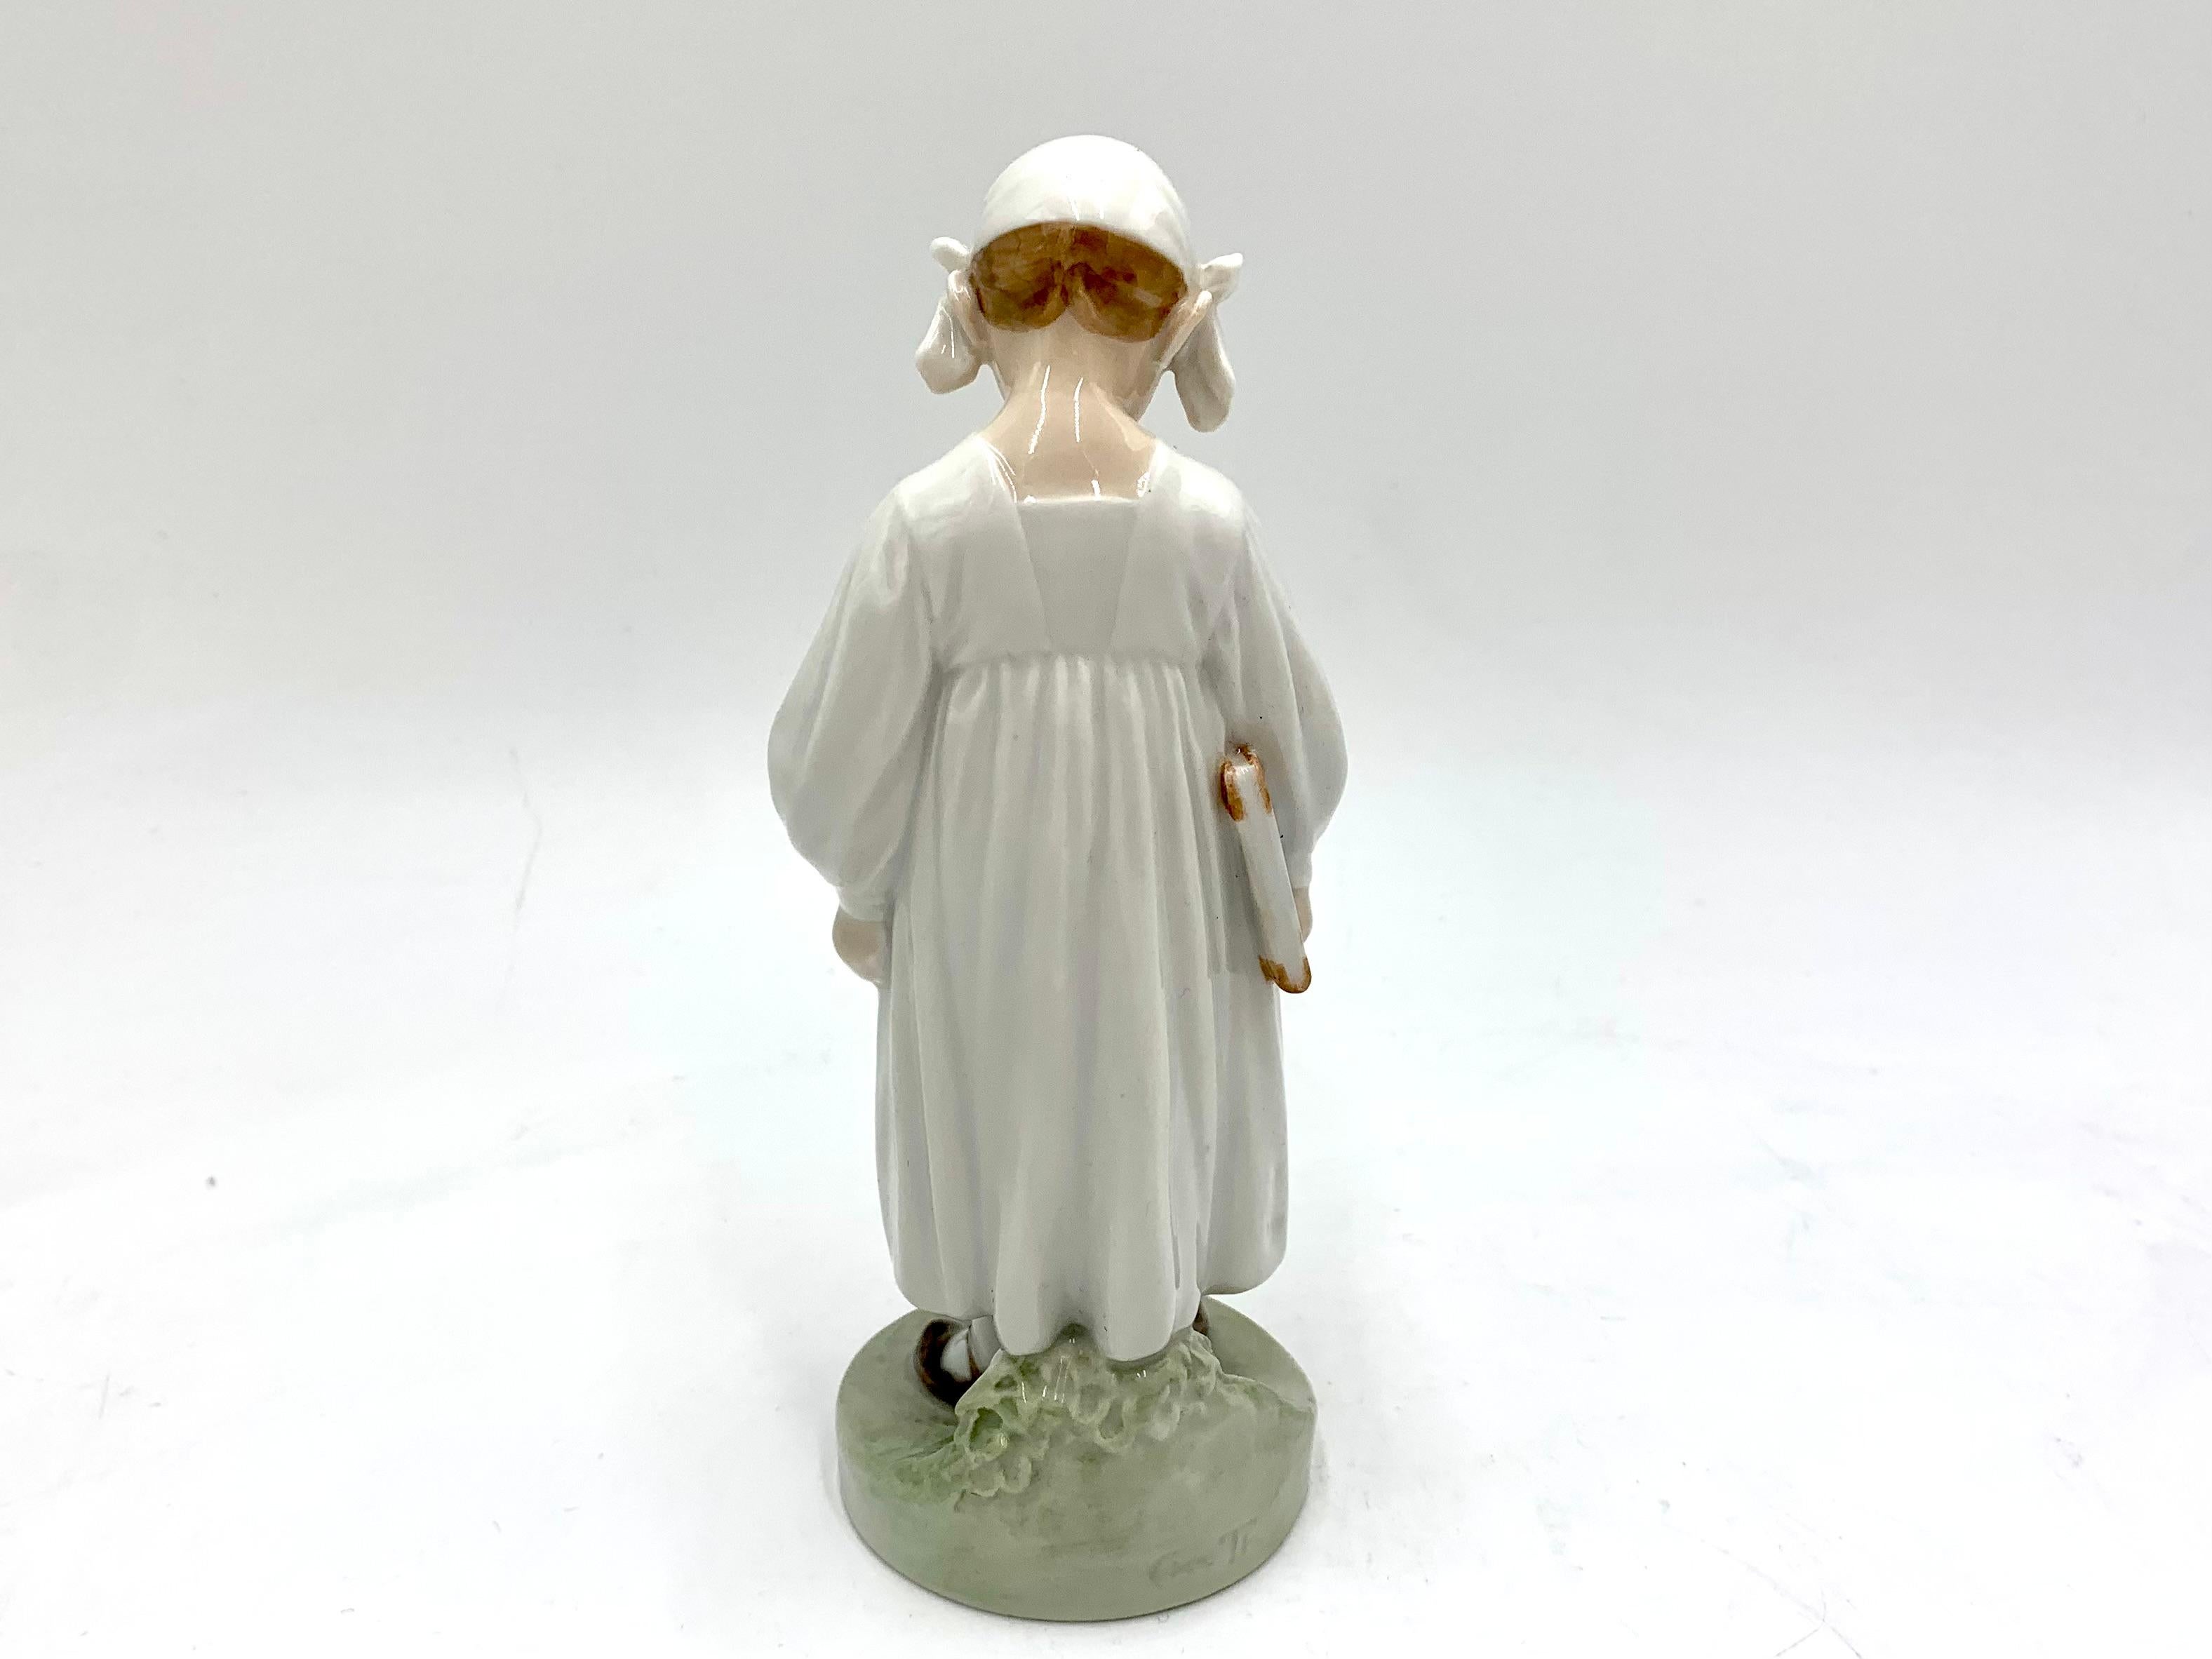 Danish Porcelain Figurine of a Girl with a Book, Royal Copenhagen, Denmark